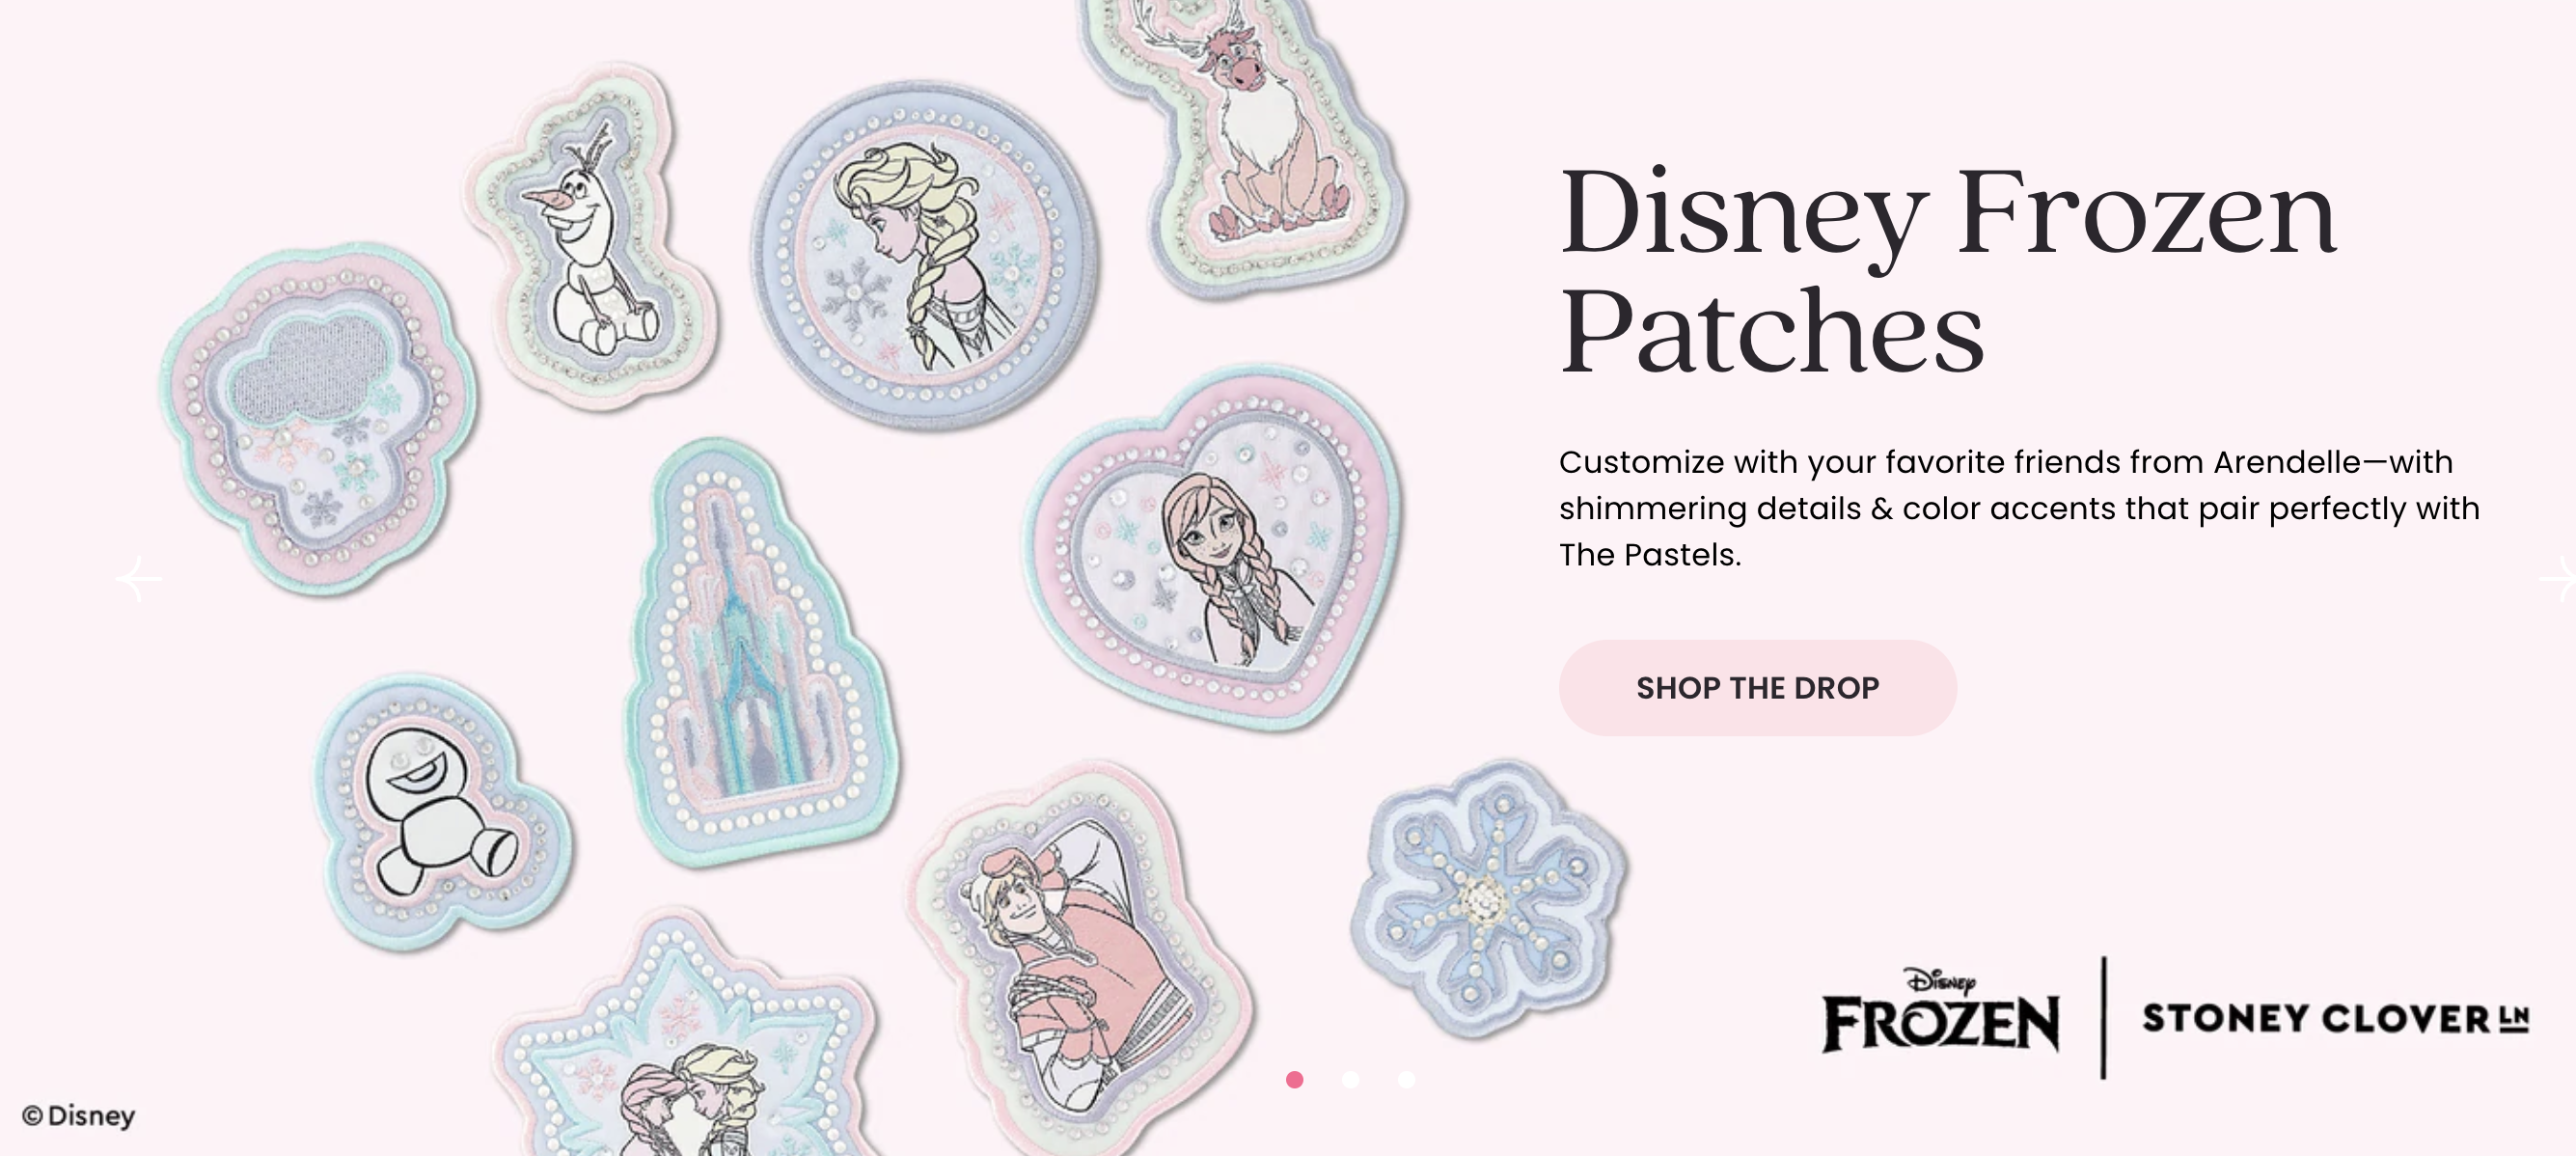 Stoney Clover Lane's Disney Princess Collection Is a Dream Come True